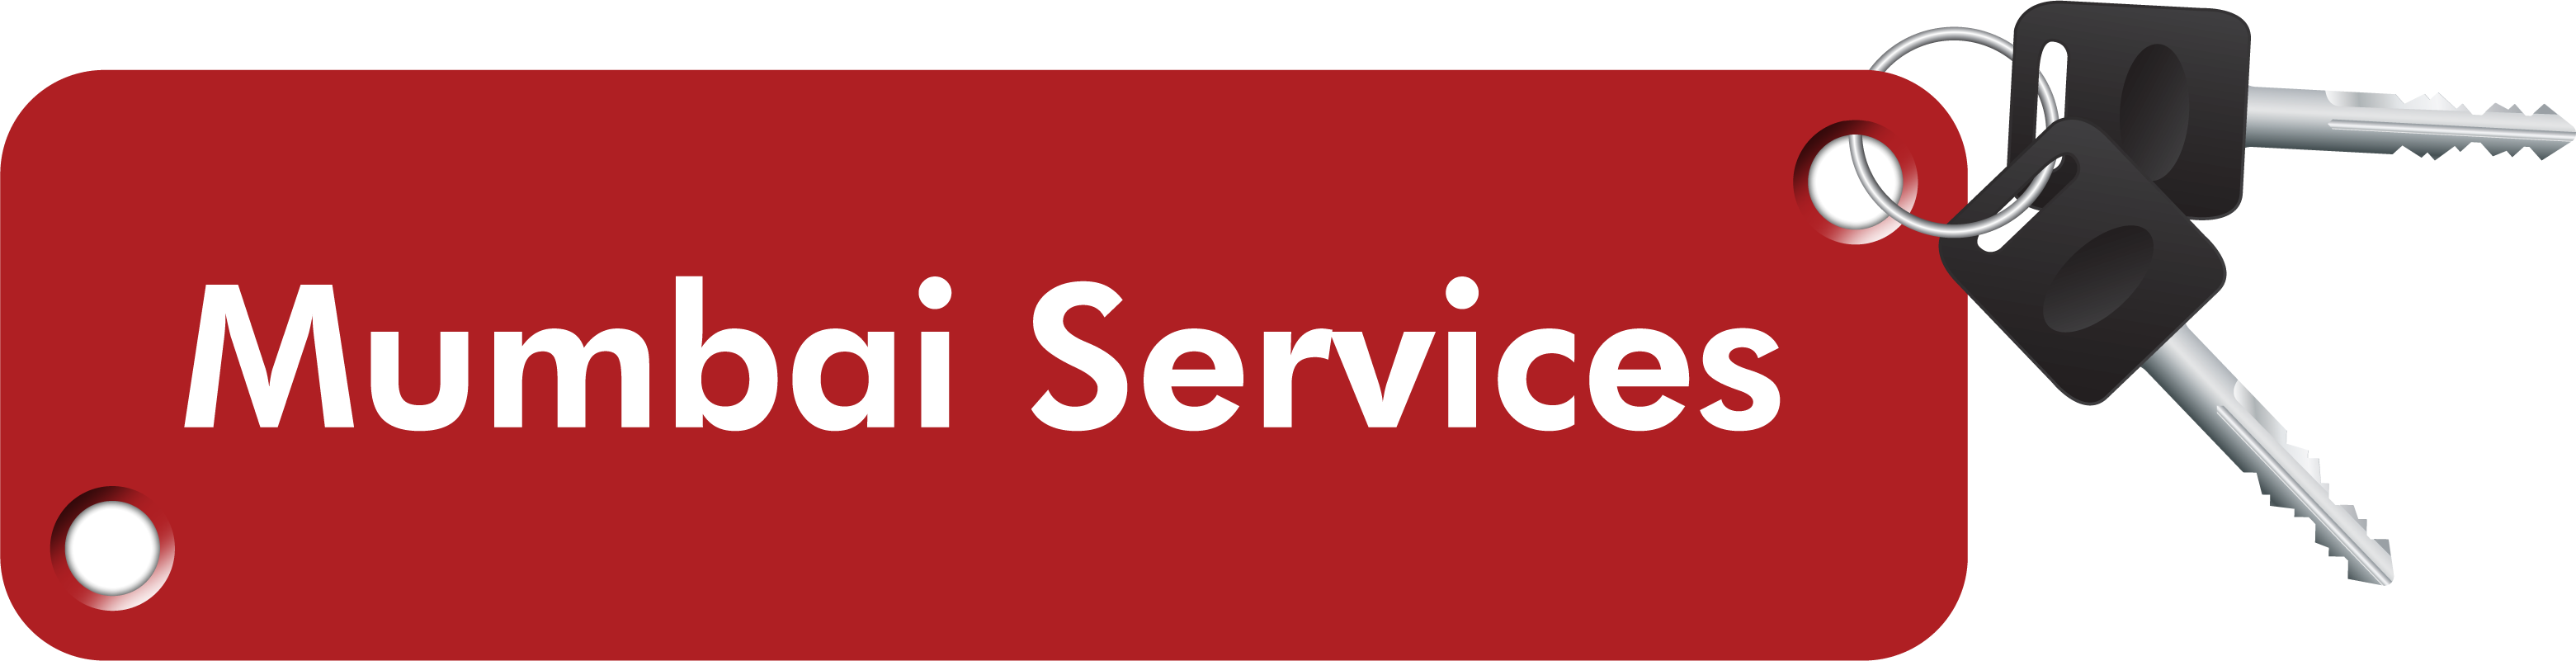 Mumbai Services